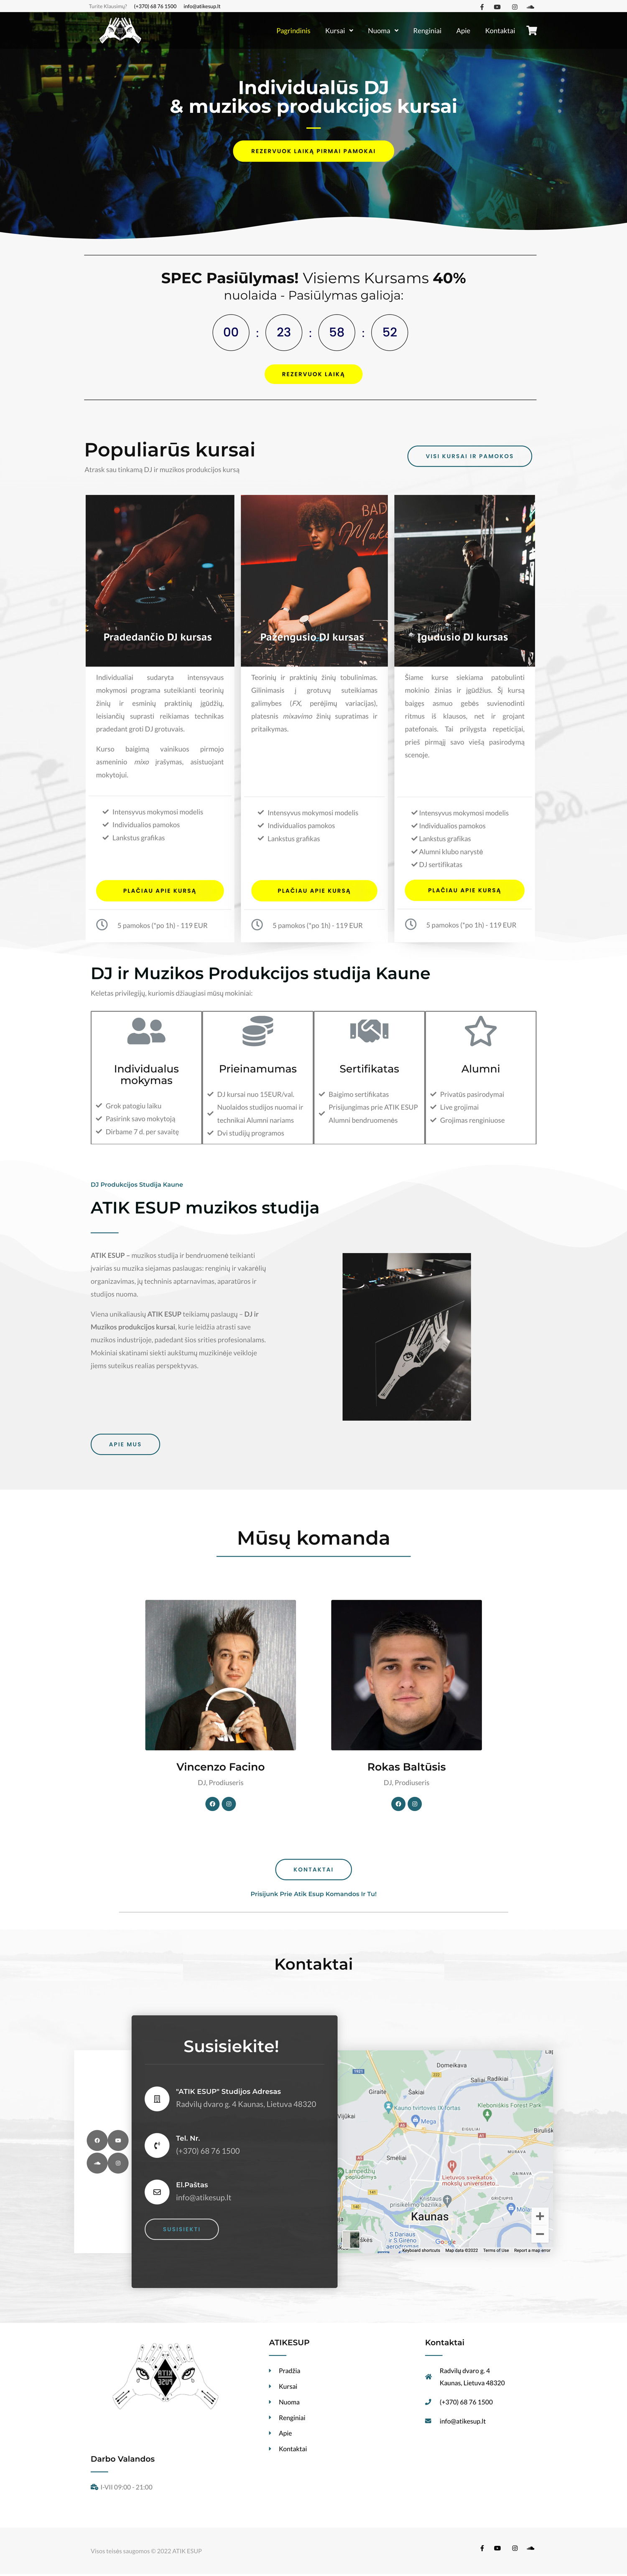 Client Website ATIK ESUP DJ and Music Production School Lithuania Web Design Odense